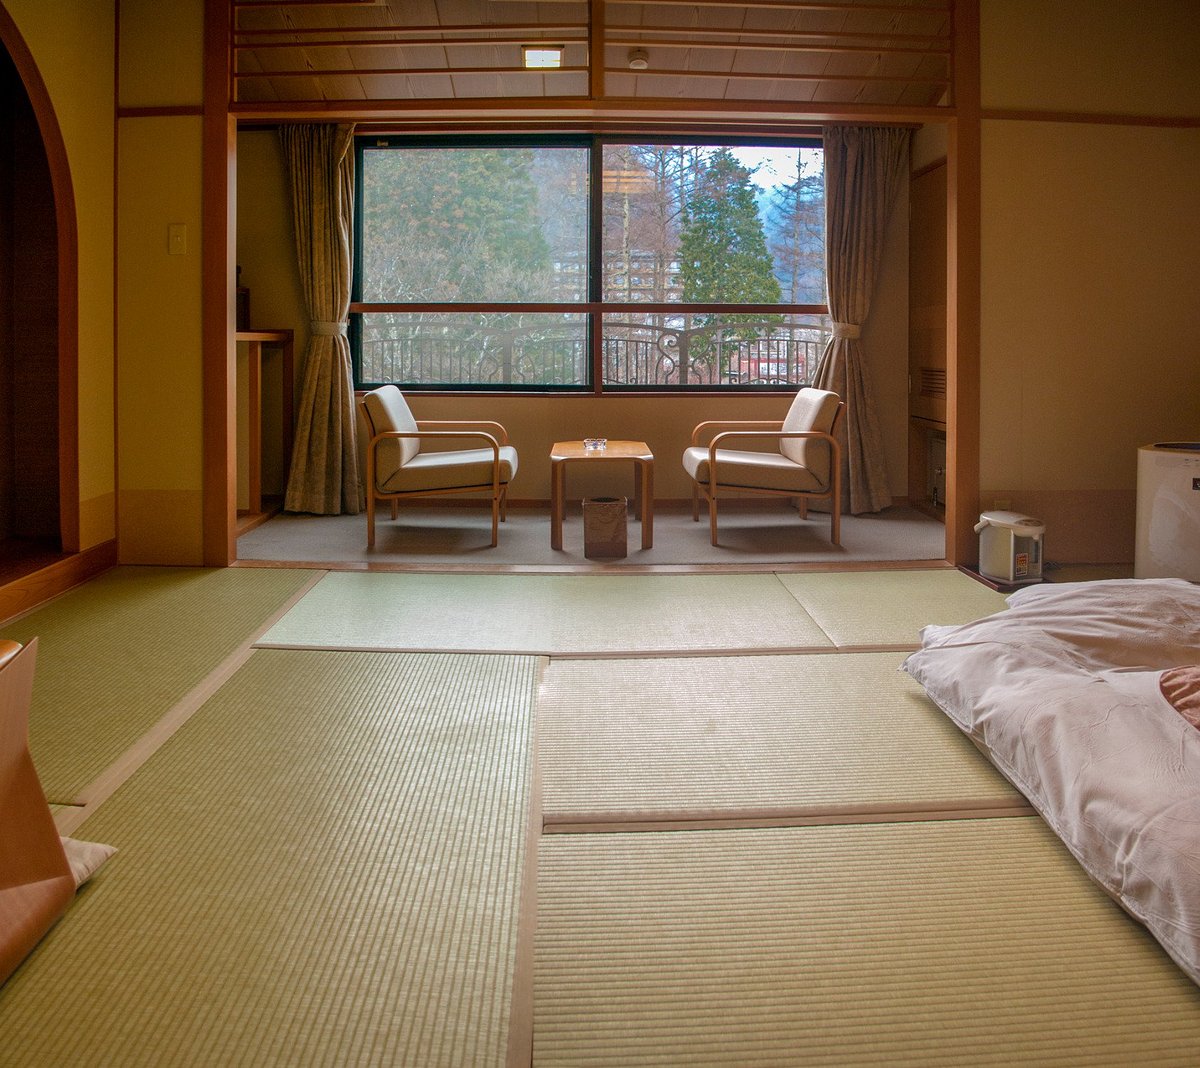 Chuo Alps Chobo No Yado Hotel Ki No Kawa Reviews Komagane Japan